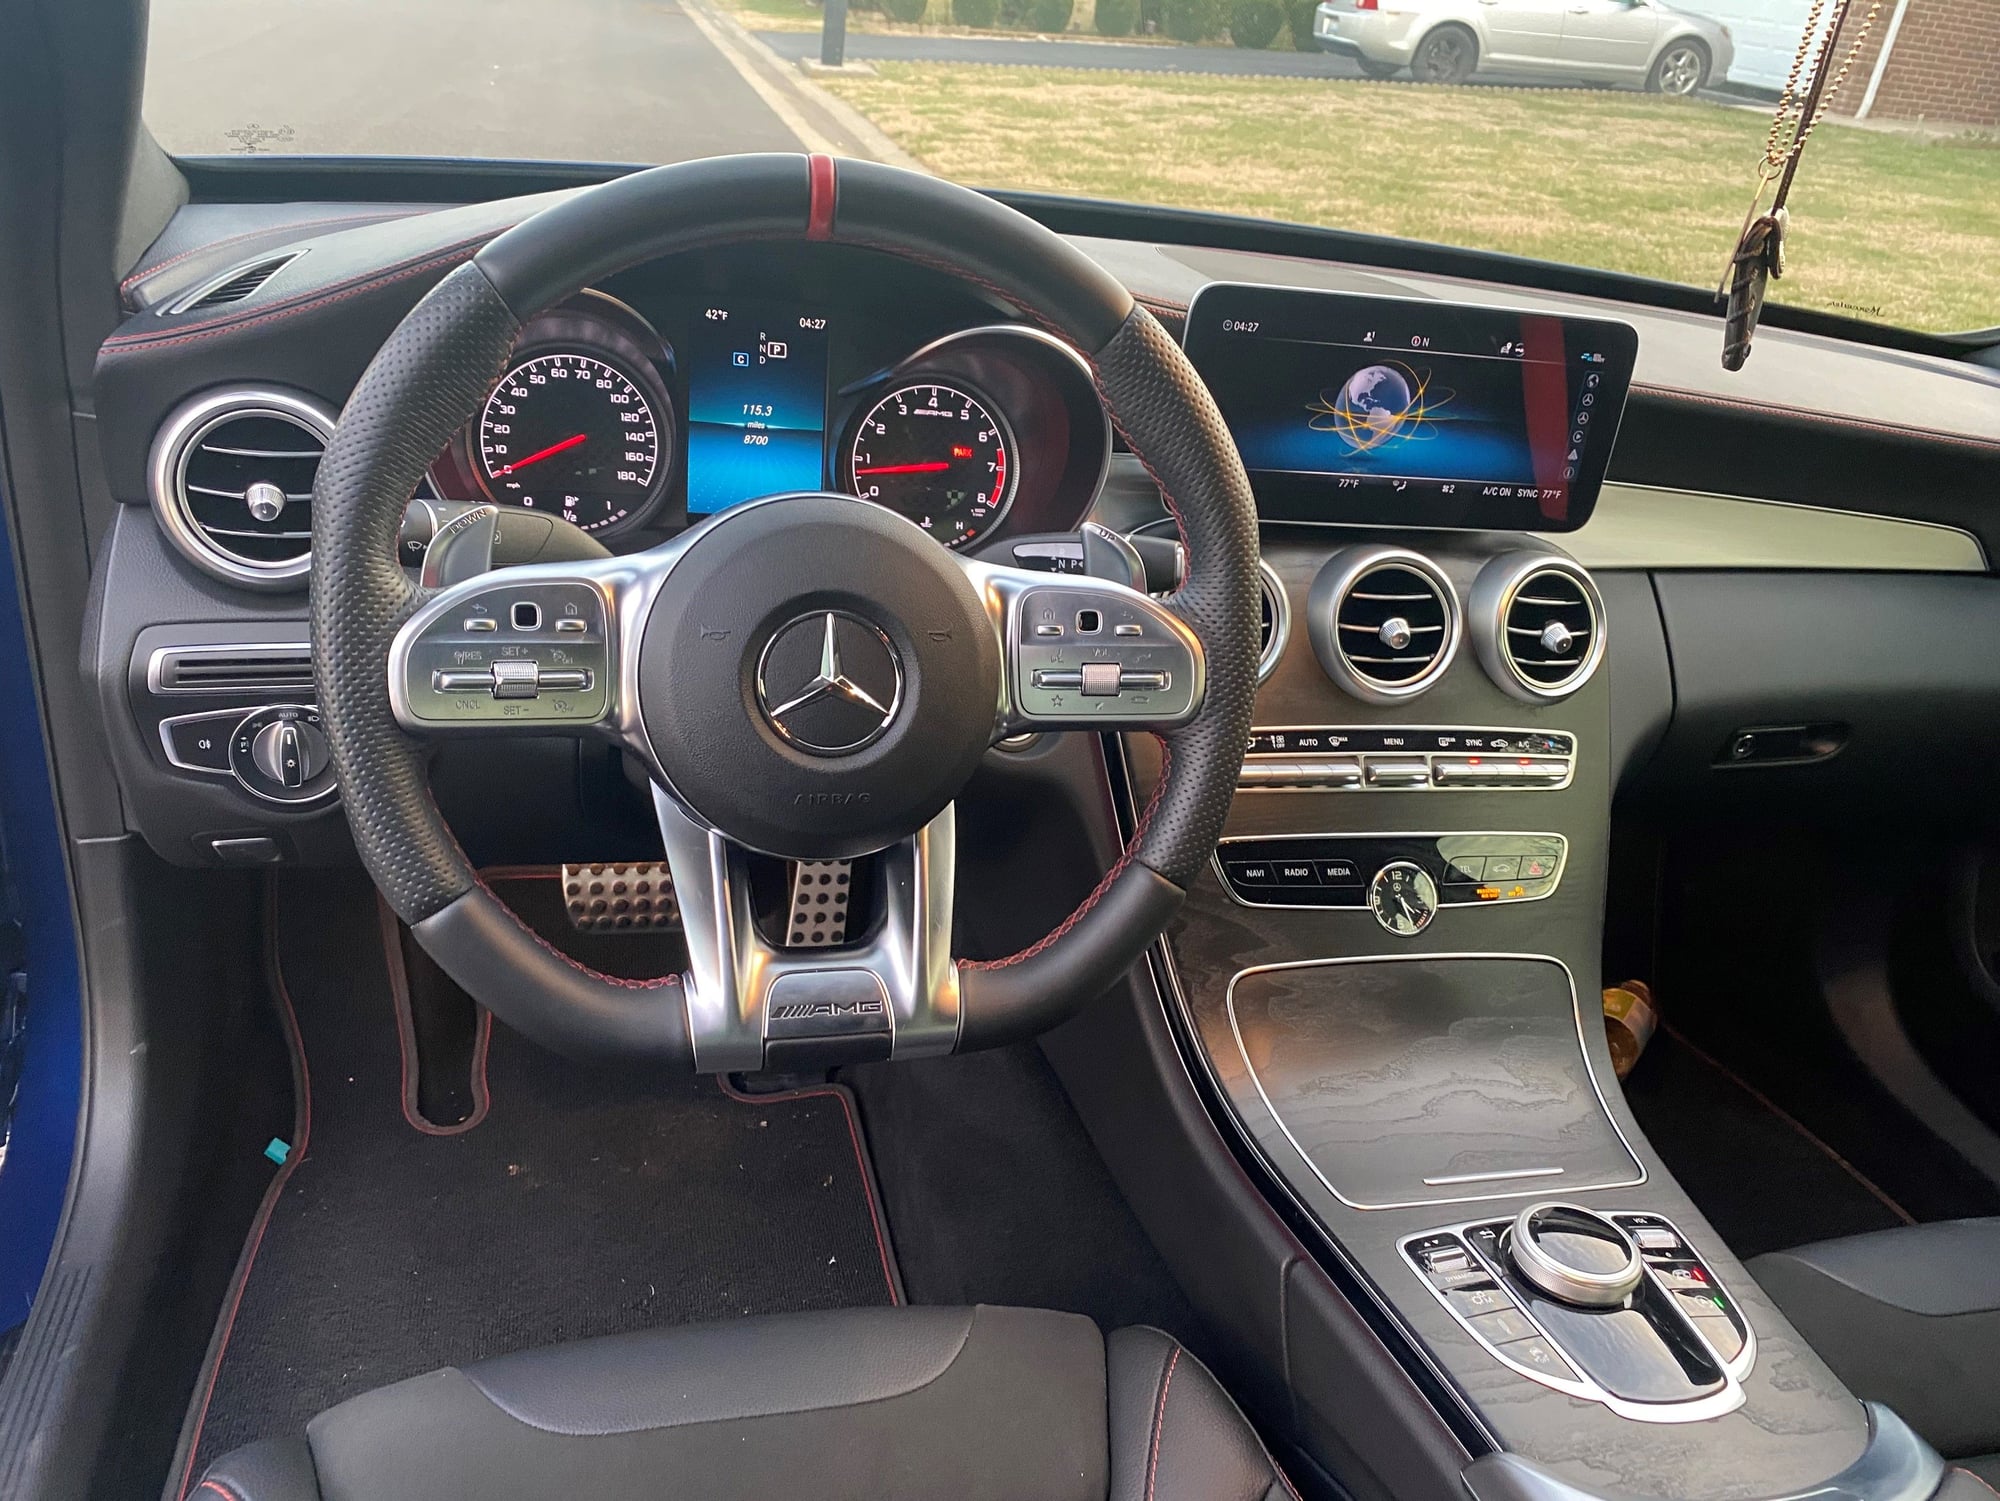 2019 Mercedes-Benz C43 AMG - 2019 C43 AMG - Used - VIN 55SWF6EB3KU307851 - 10,500 Miles - 6 cyl - AWD - Automatic - Sedan - Blue - Bowling Green, KY 42101, United States